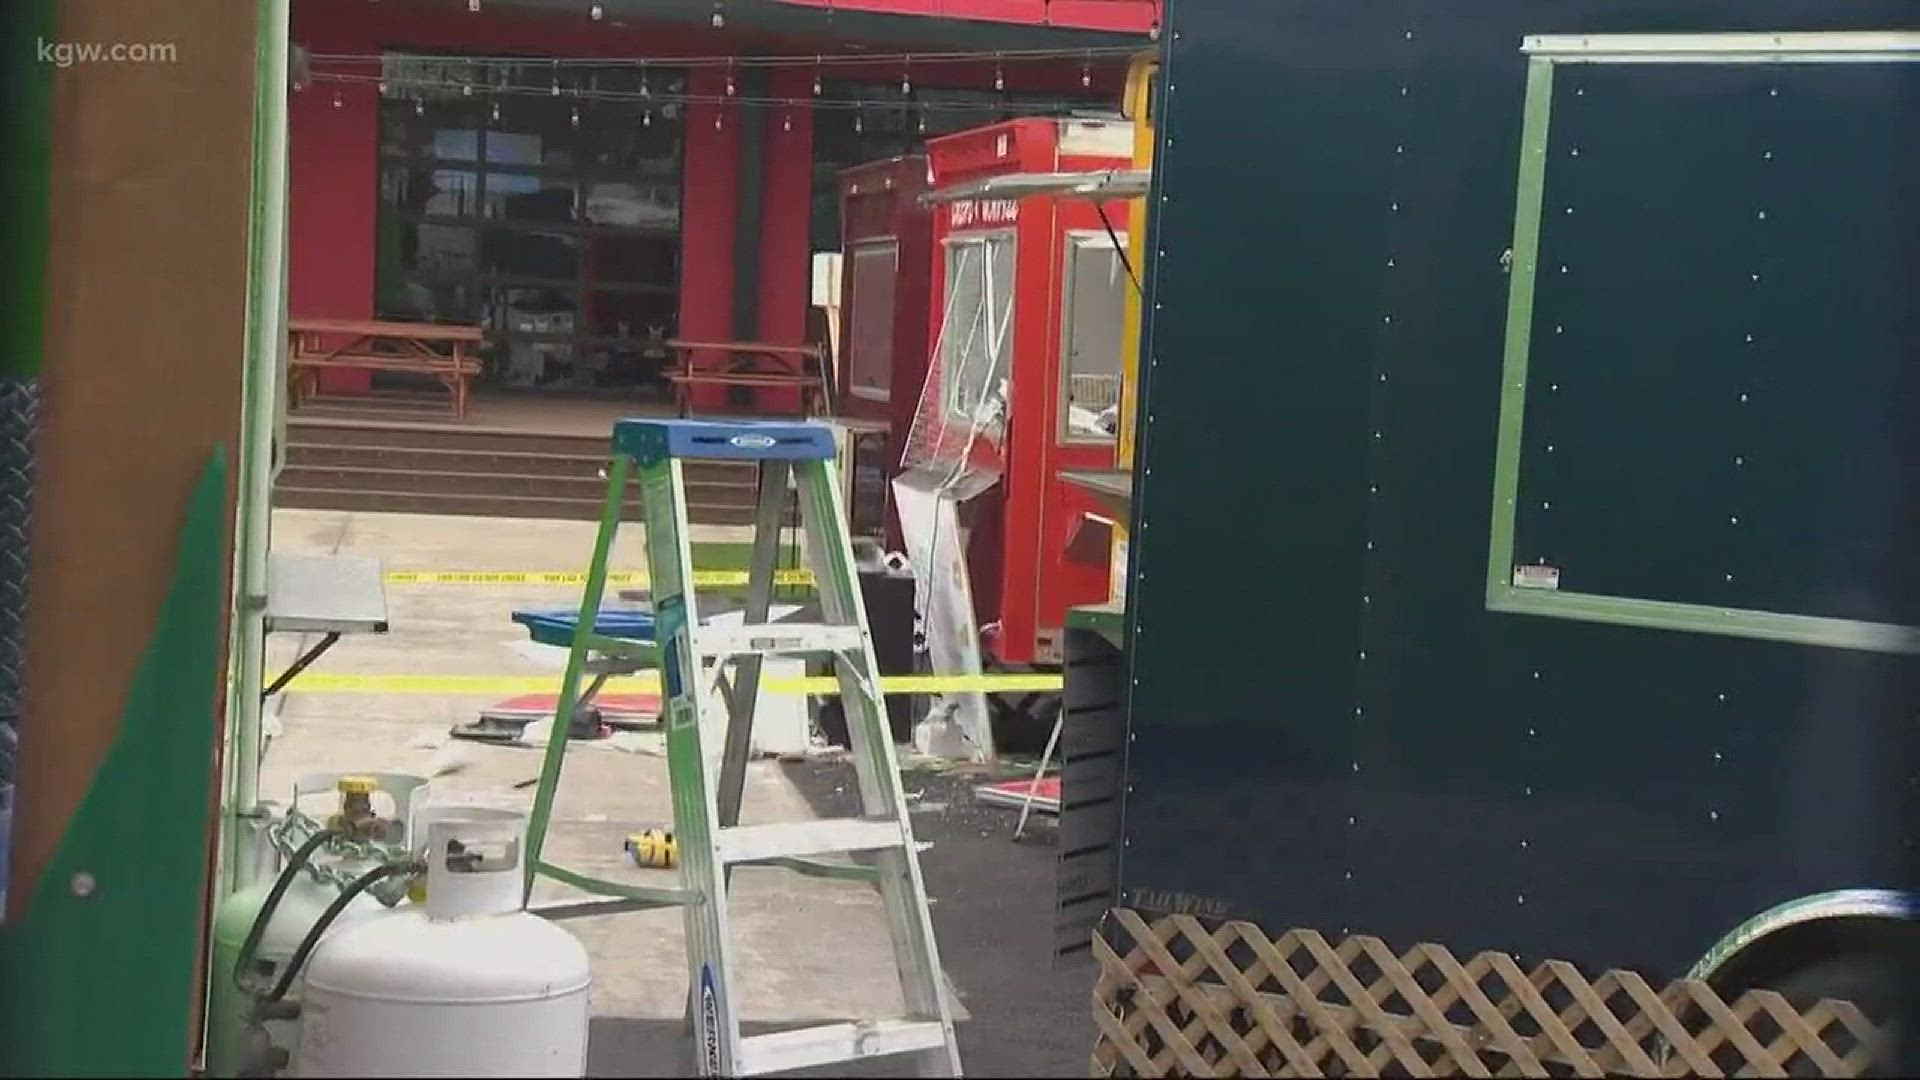 Food cart explodes in Beaverton